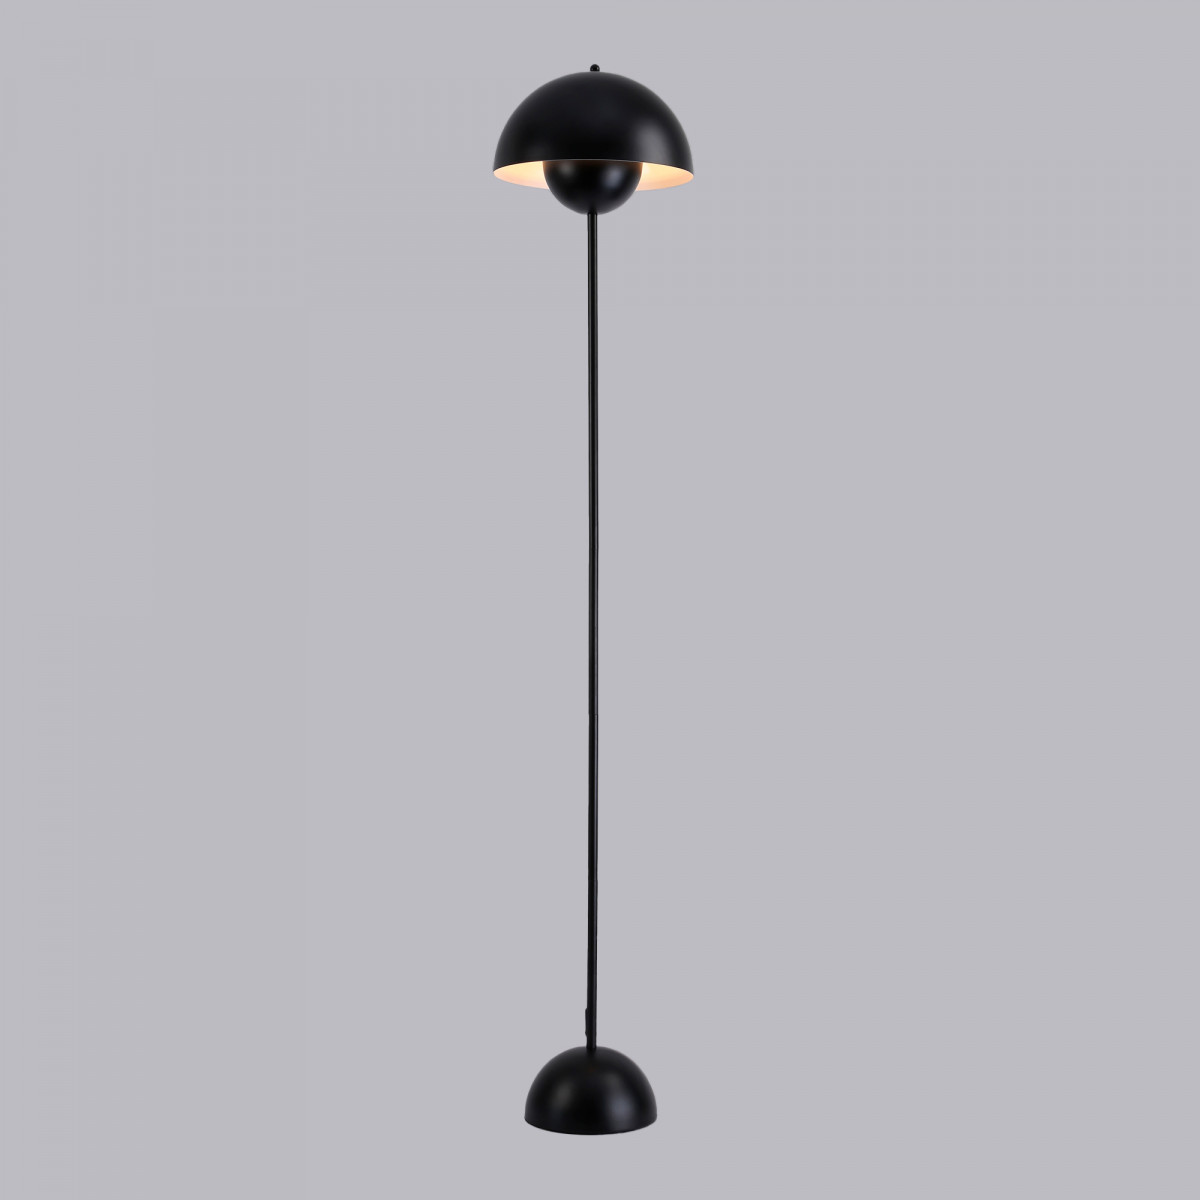 Floor lamp "Shapó" / "Flowerpot" inspiration